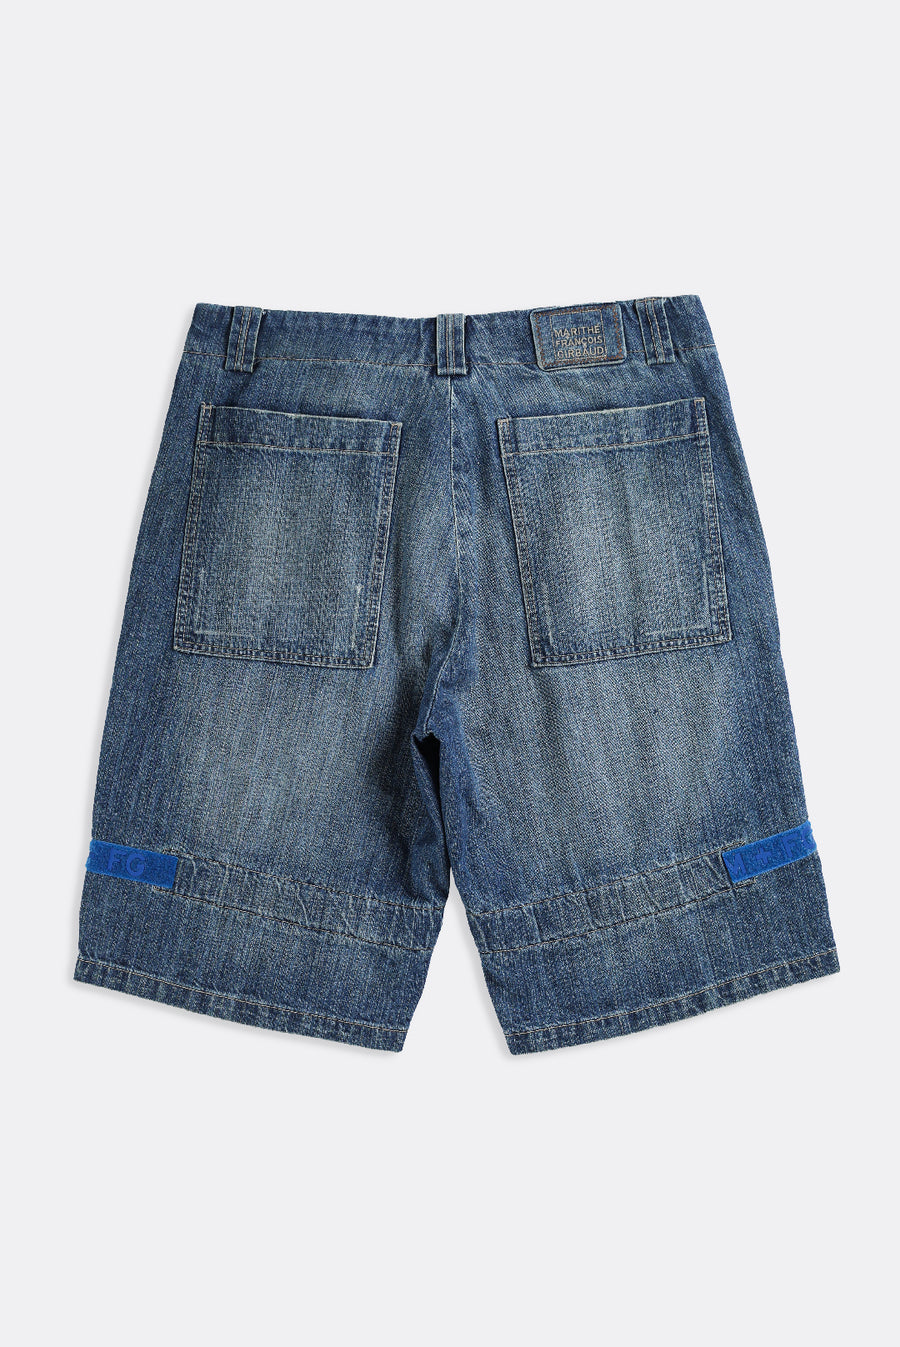 Vintage Girbaud Denim Shorts - W39